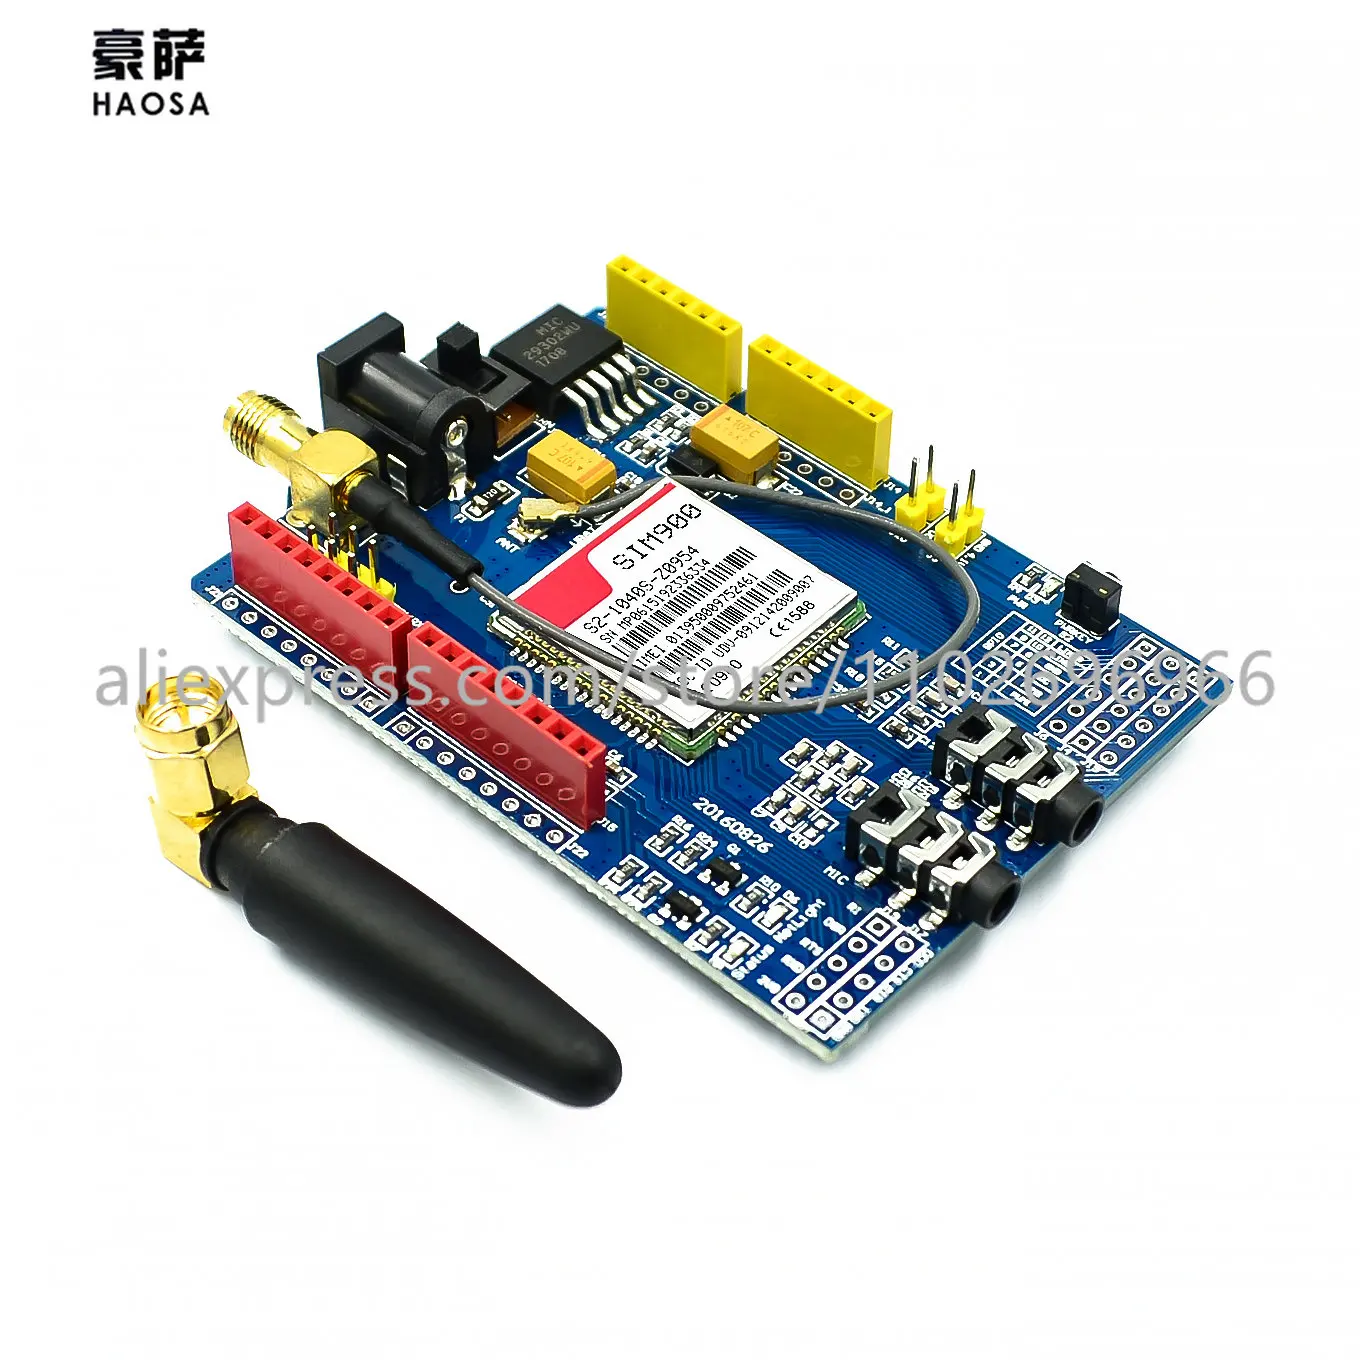 

1pcs SIM900 GPRS GSM Shield Development Board Quad-Band Module kit For Arduino